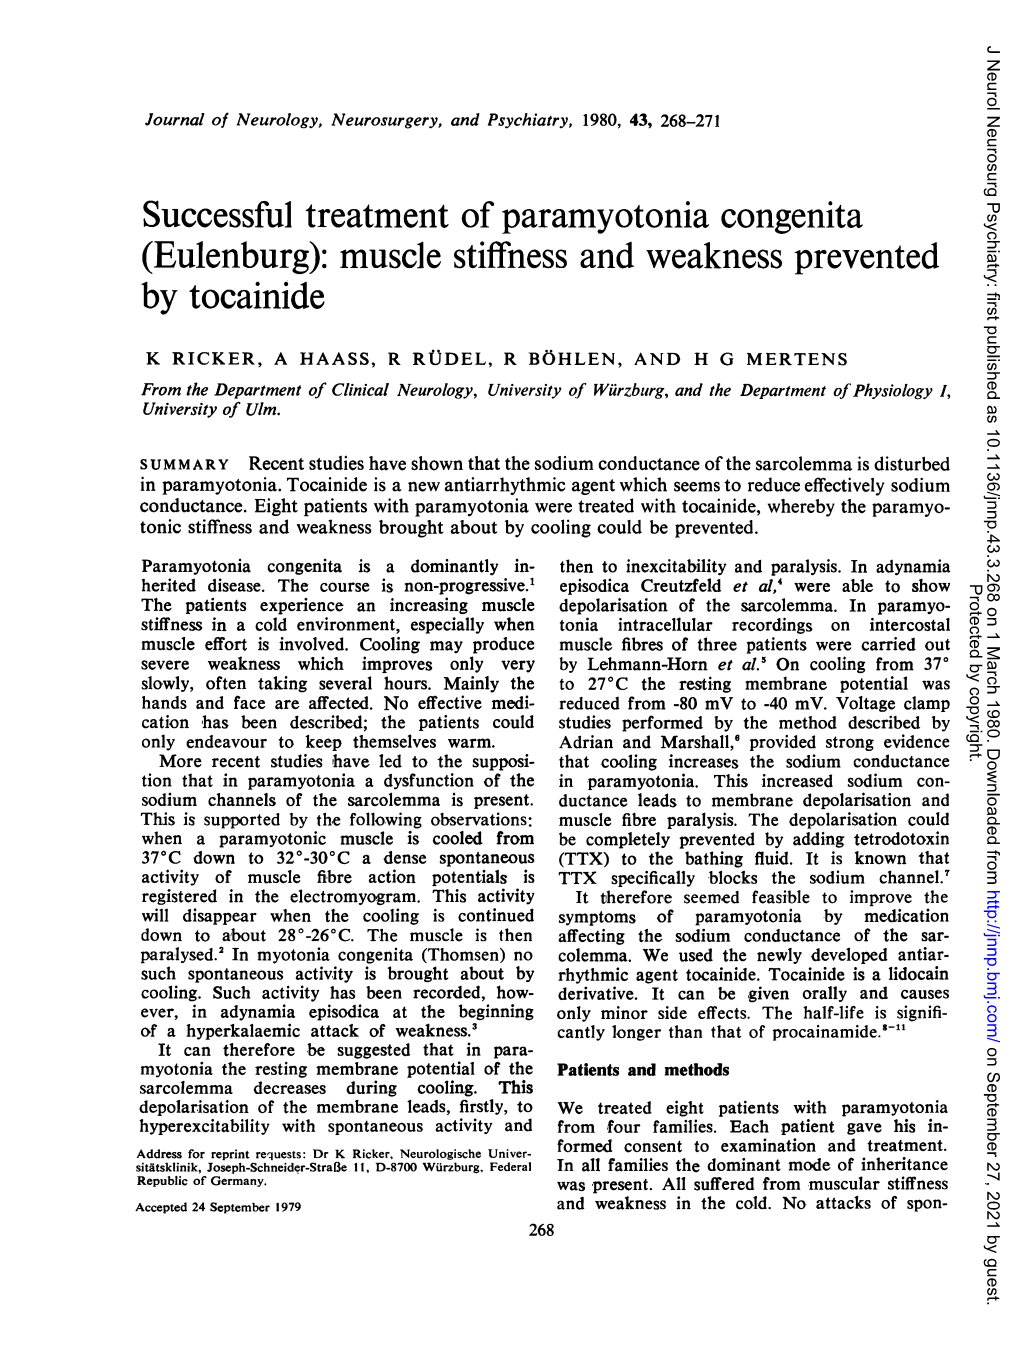 Successful Treatment of Paramyotonia Congenita by Tocainide